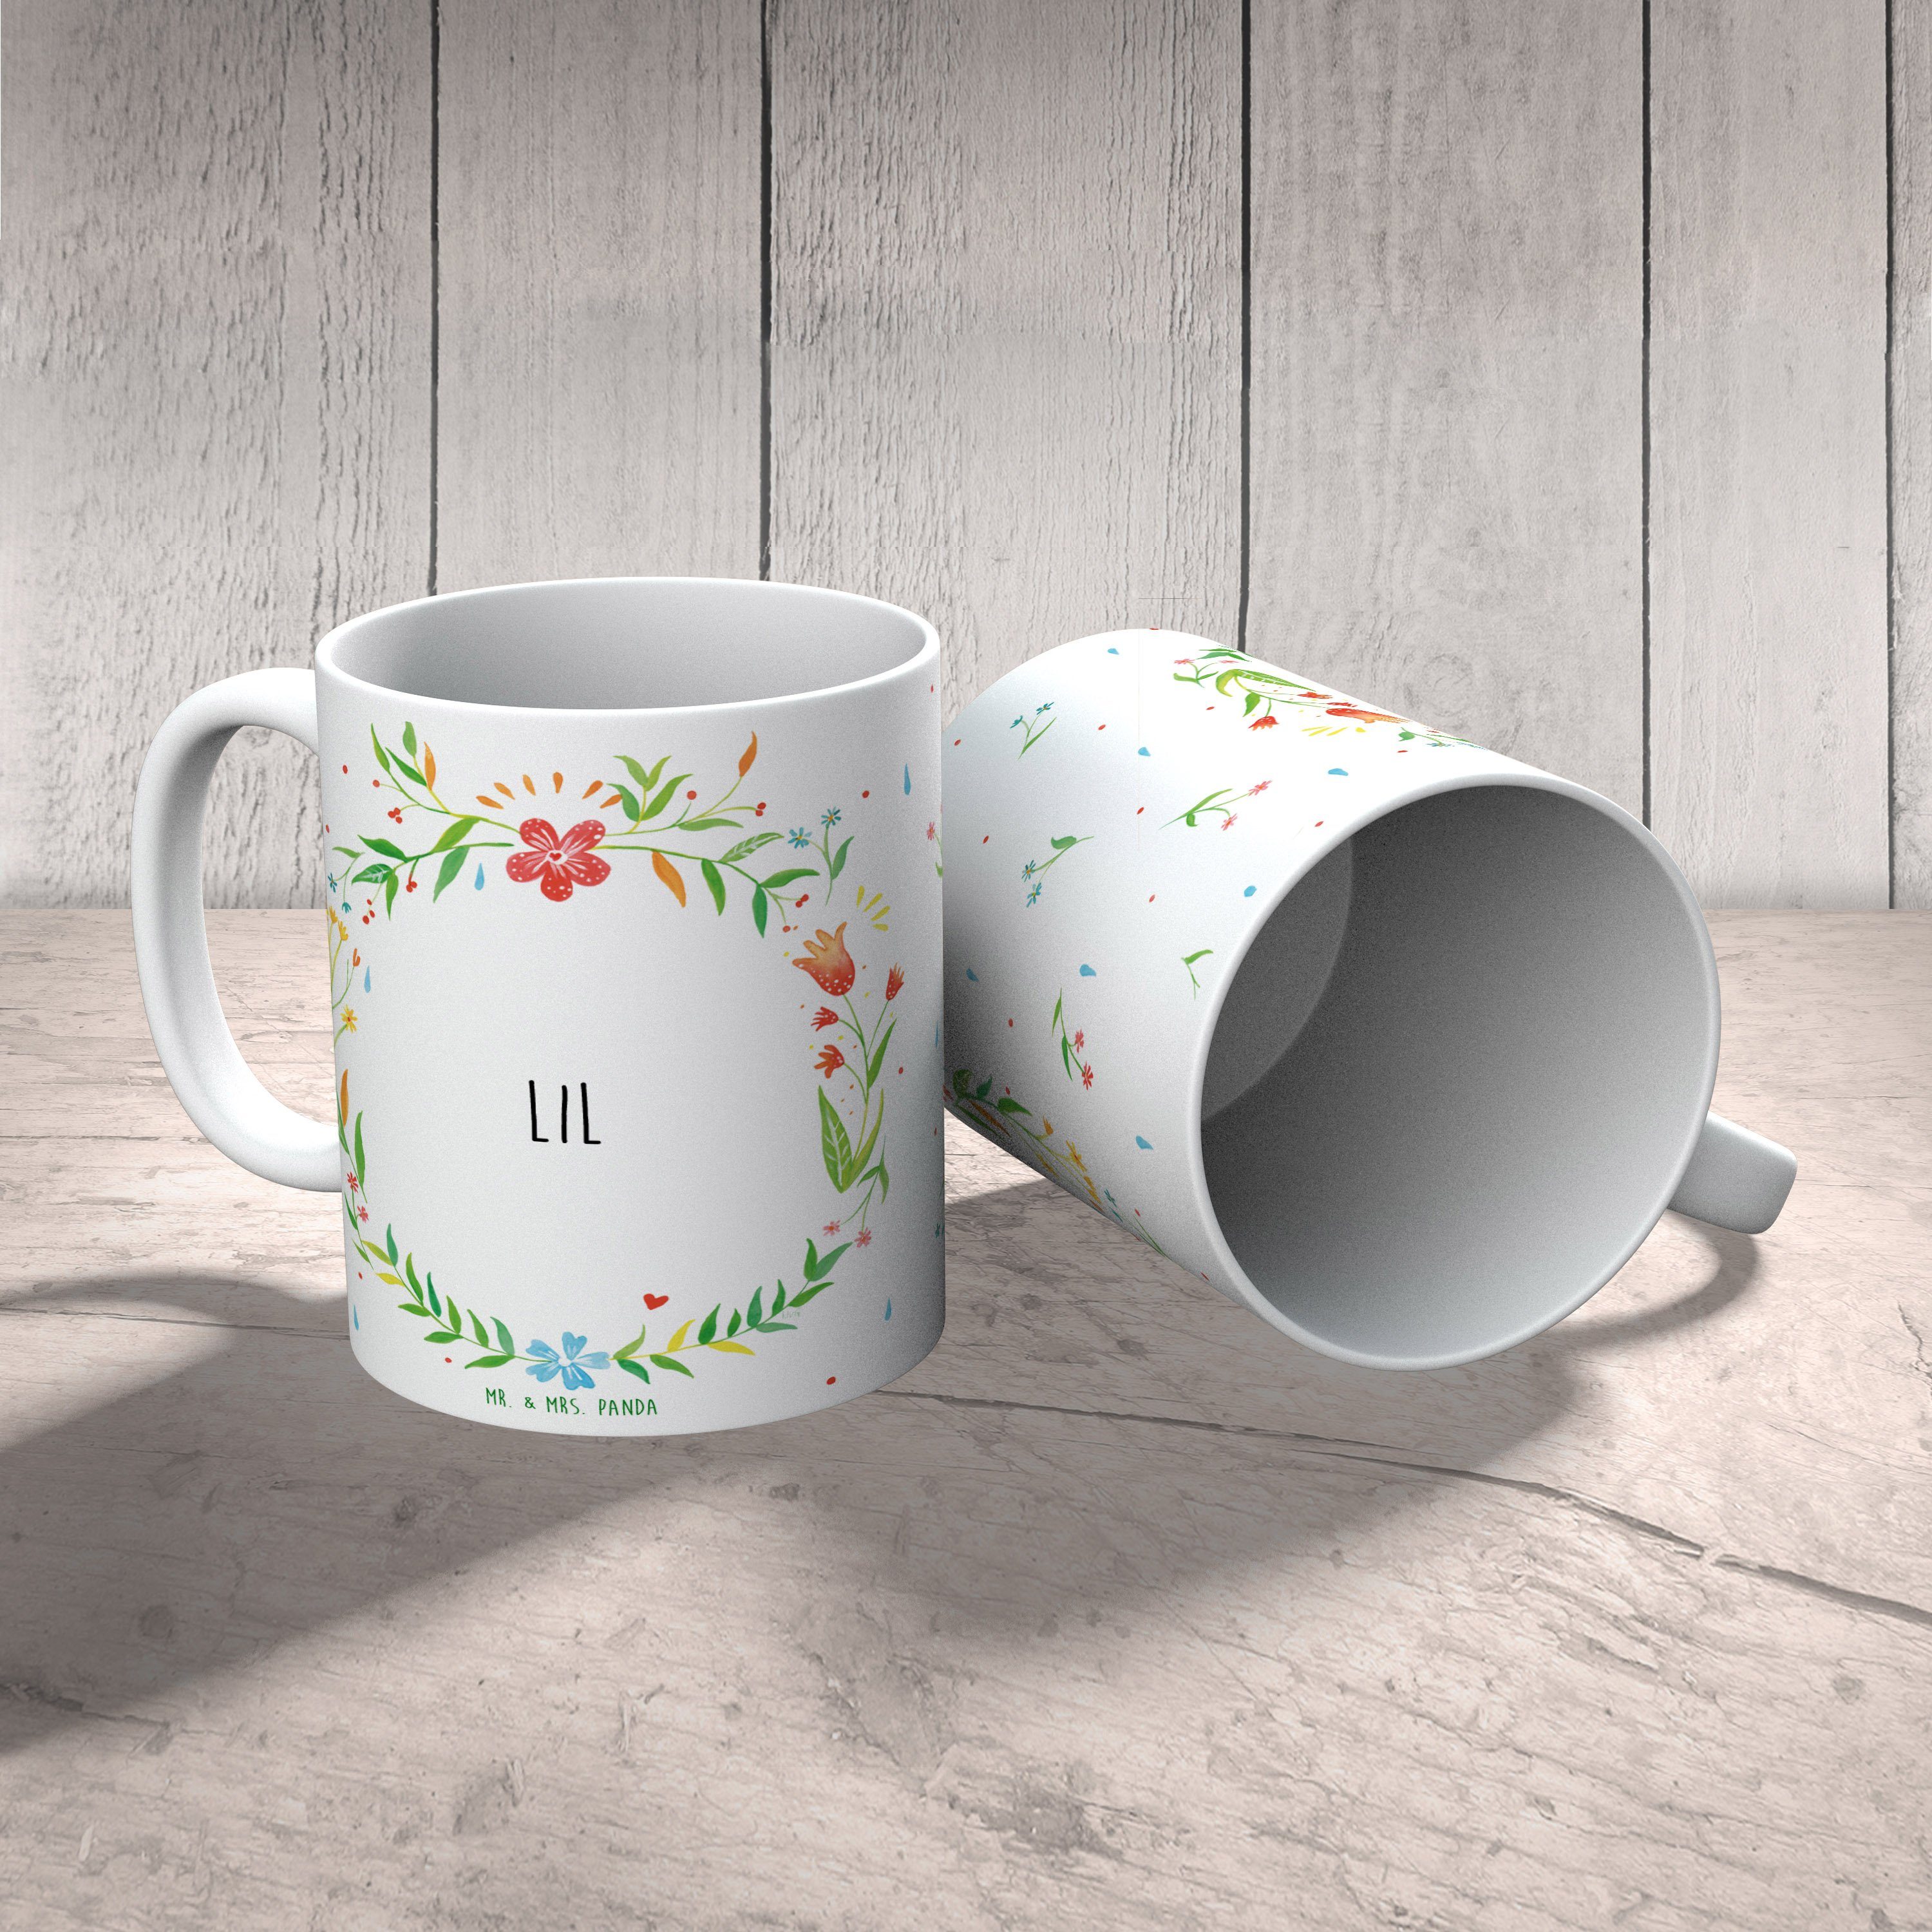 Tasse, Porzellantasse, Keramik Tasse Tasse, Lil Mrs. Mr. Panda Büro Motive, Teet, & Tasse Geschenk, -